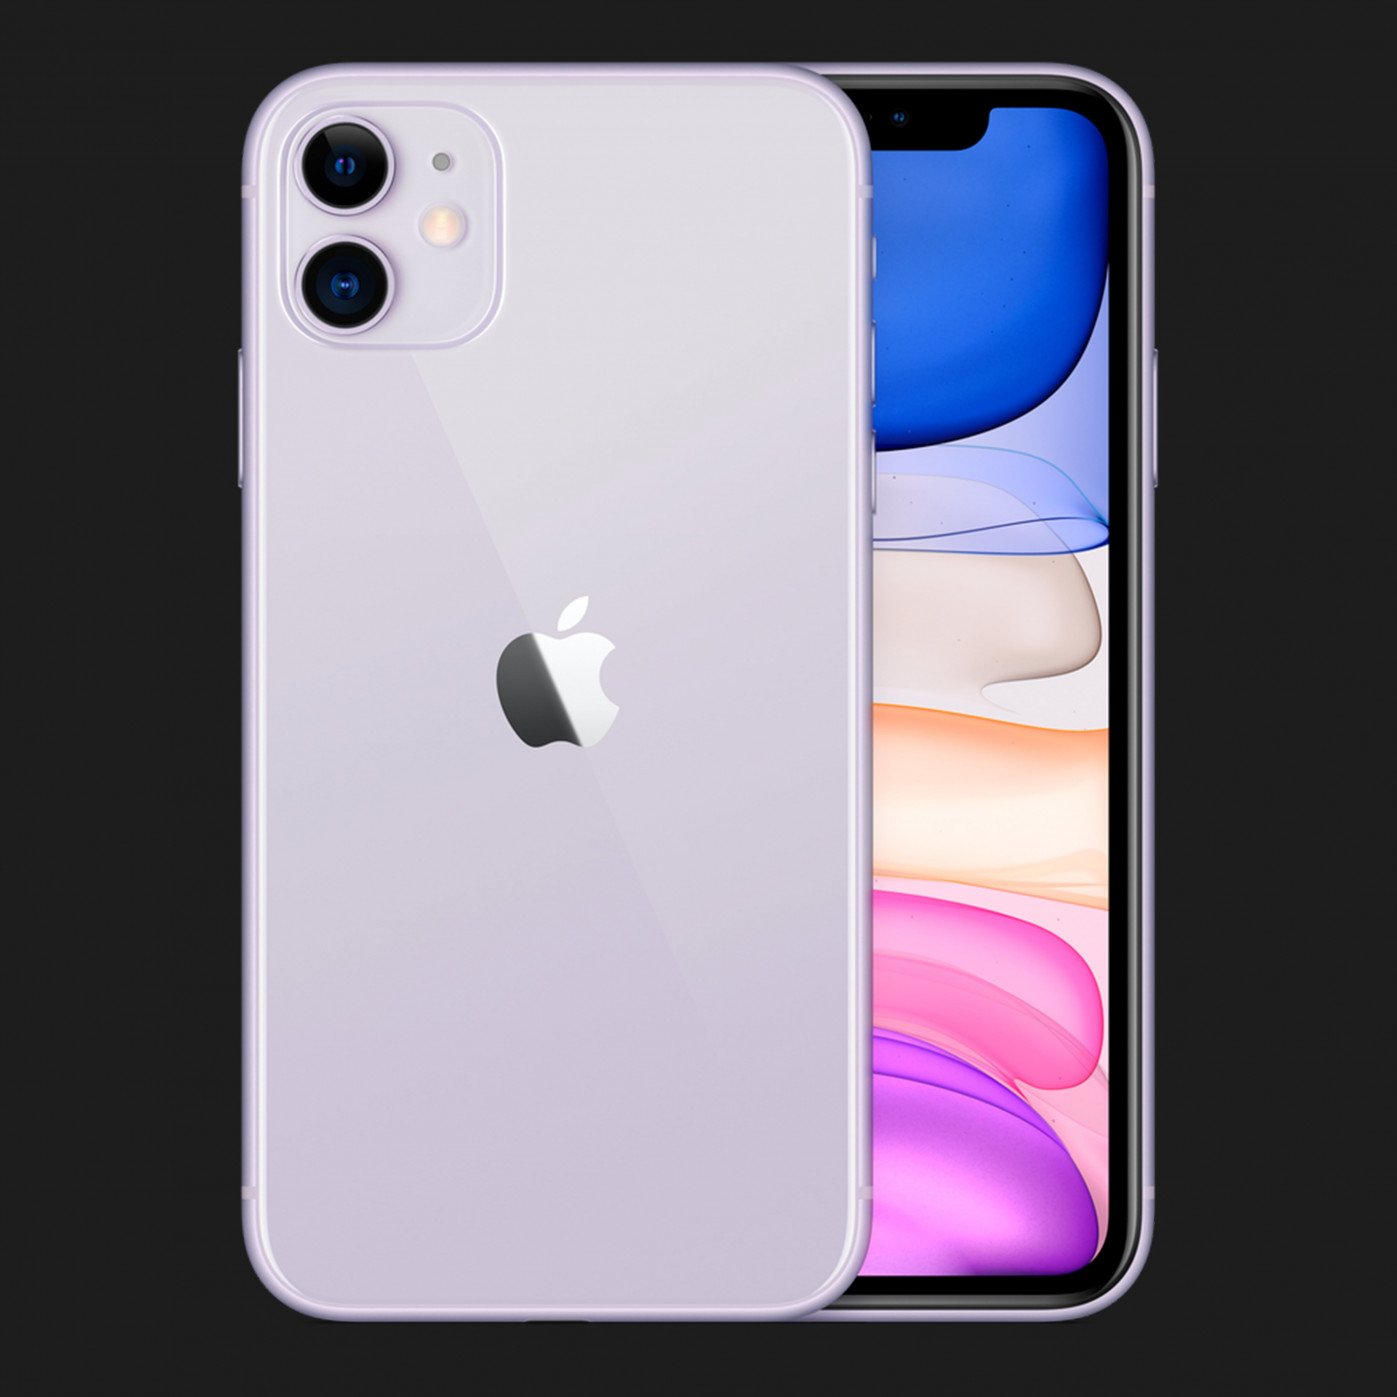 Apple iPhone 11 128GB (Purple)